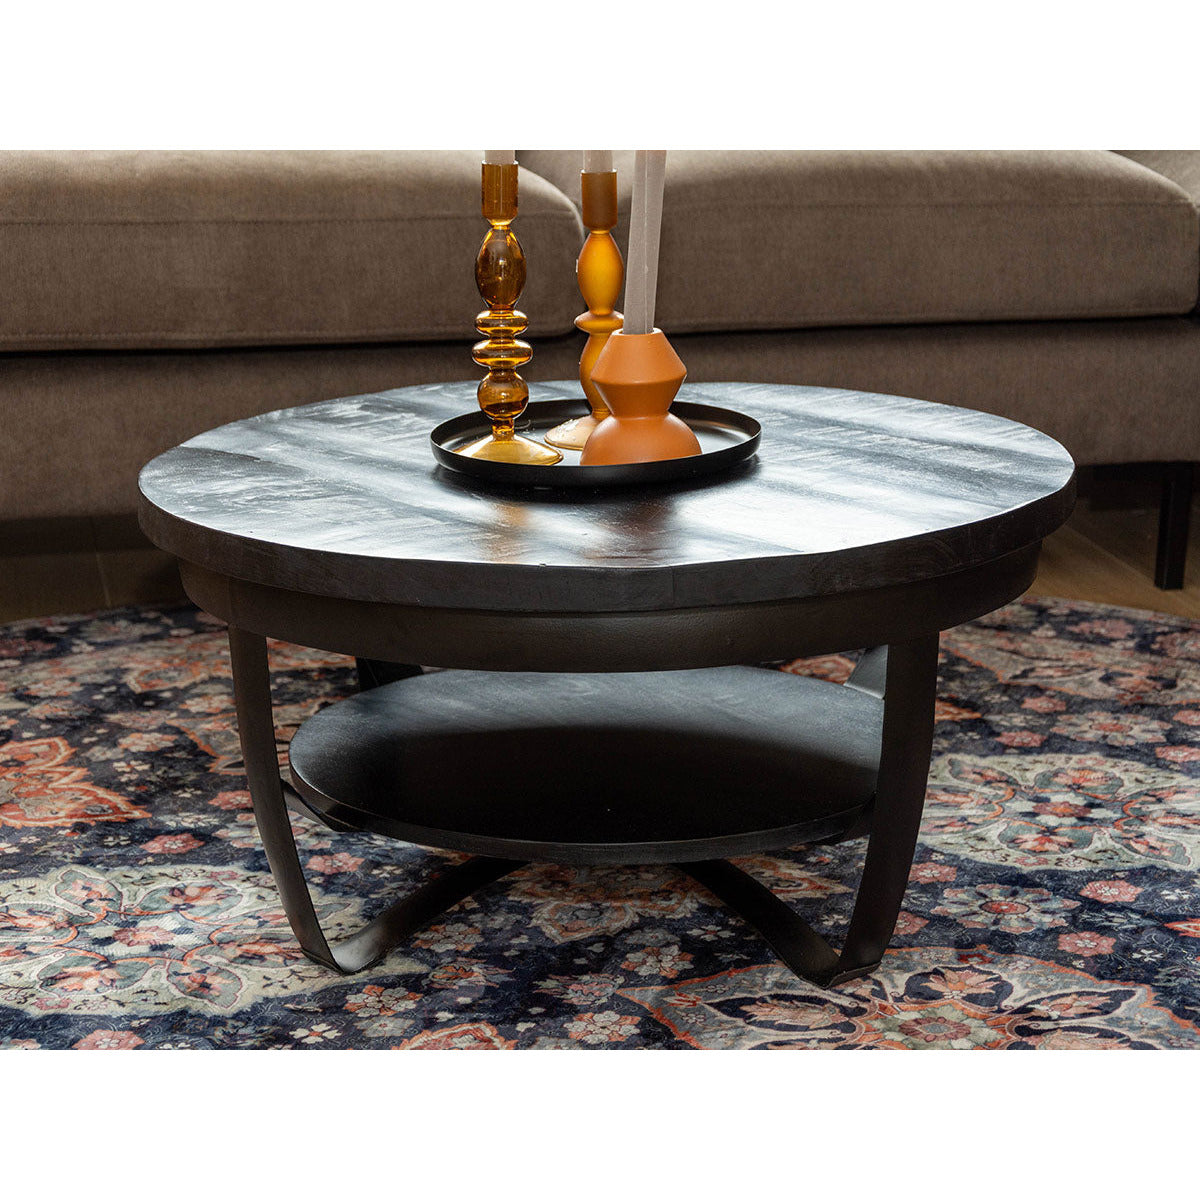 Coffee table Cilamon - 70 cm - Black top - Black base